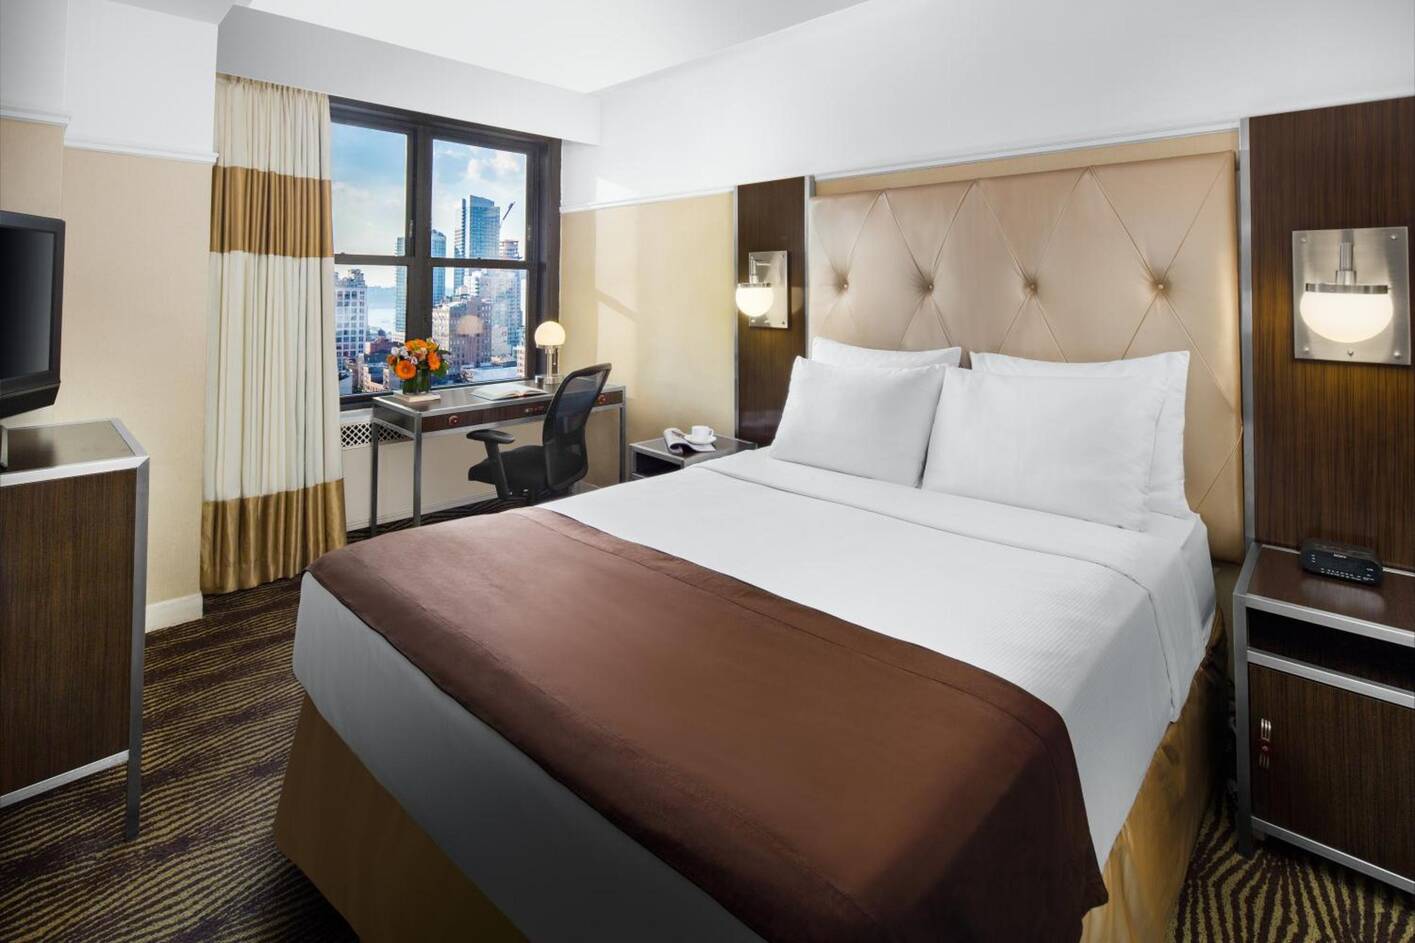 The New Yorker Hotel, hoteles baratos en Times Square bien ubicados